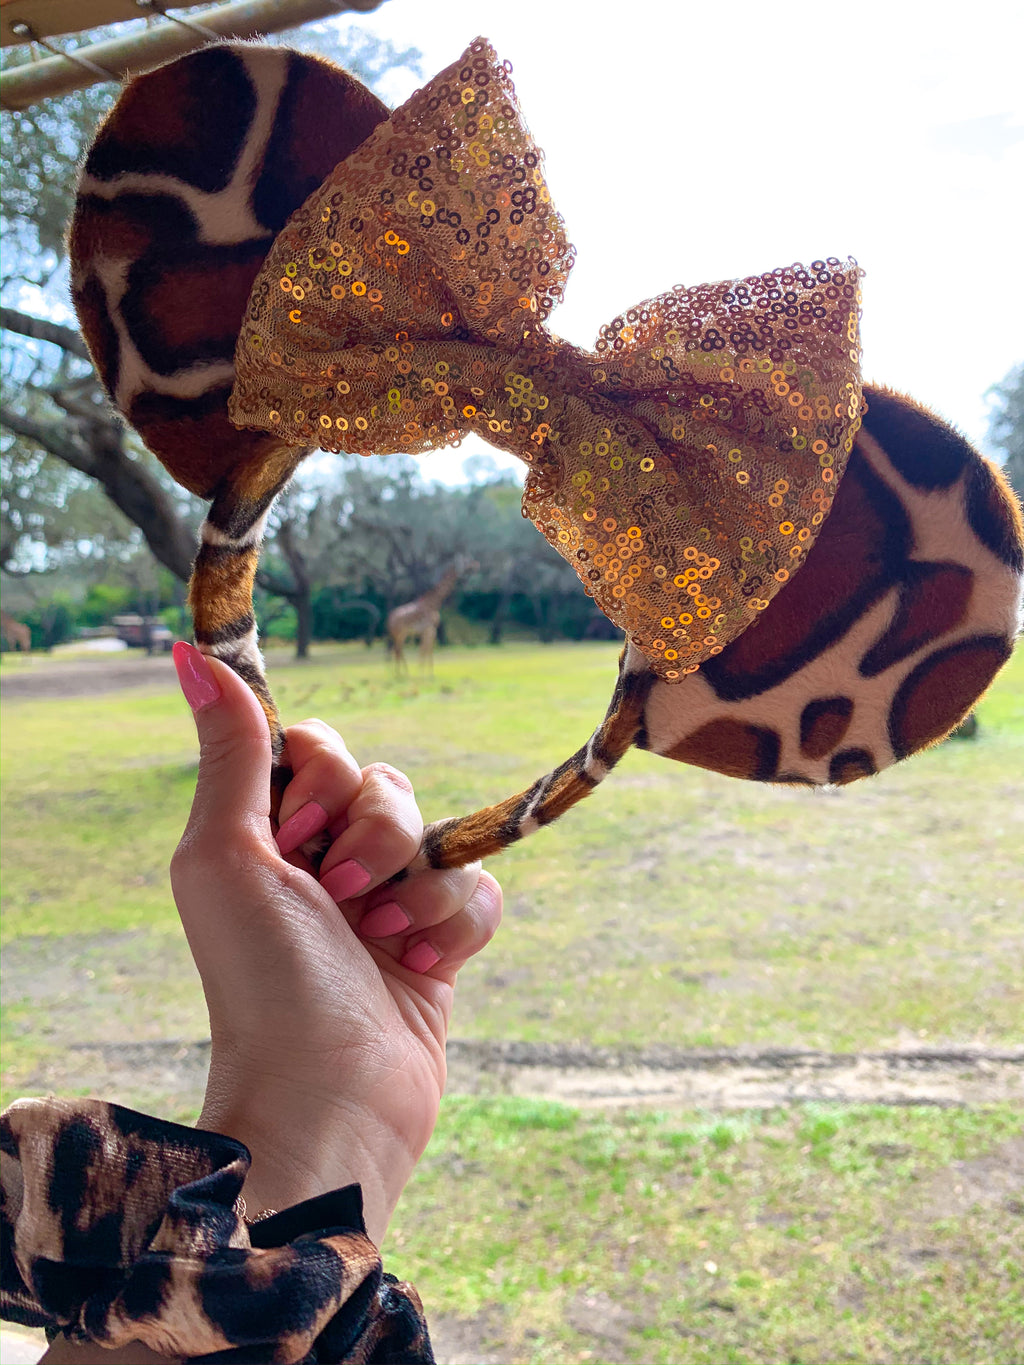 Disney Inspired Animal Kingdom Giraffe Ears